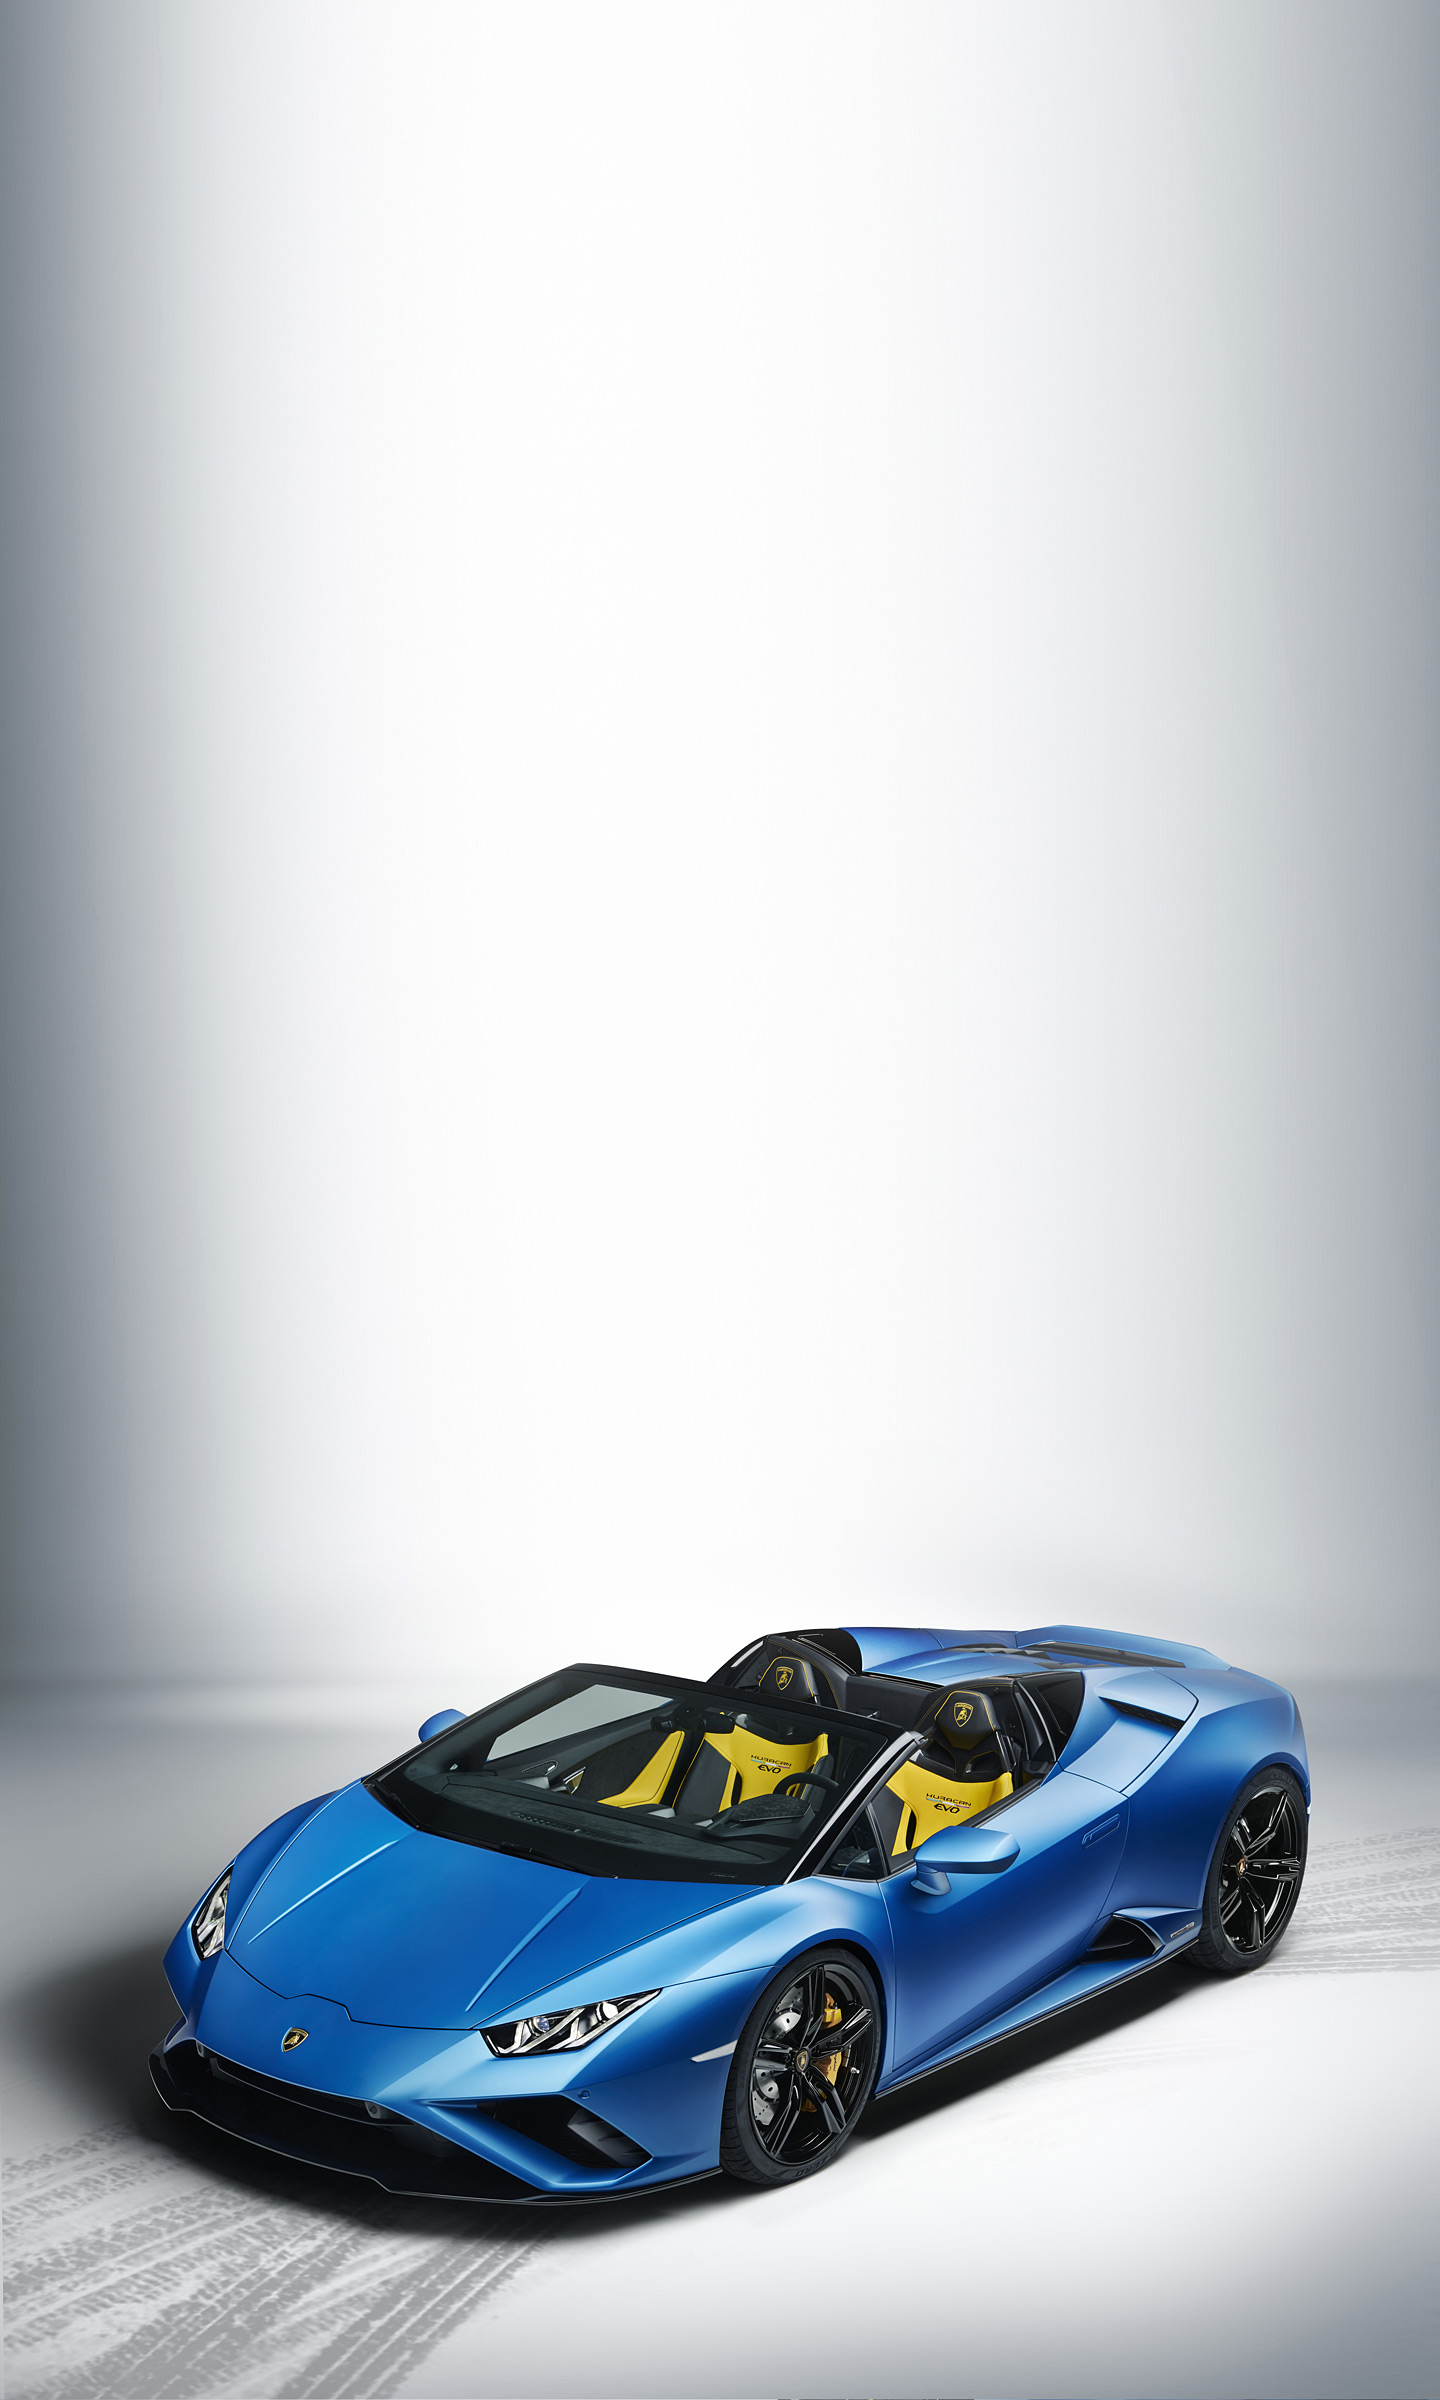  2021 Lamborghini Huracan Evo RWD Spyder Wallpaper.